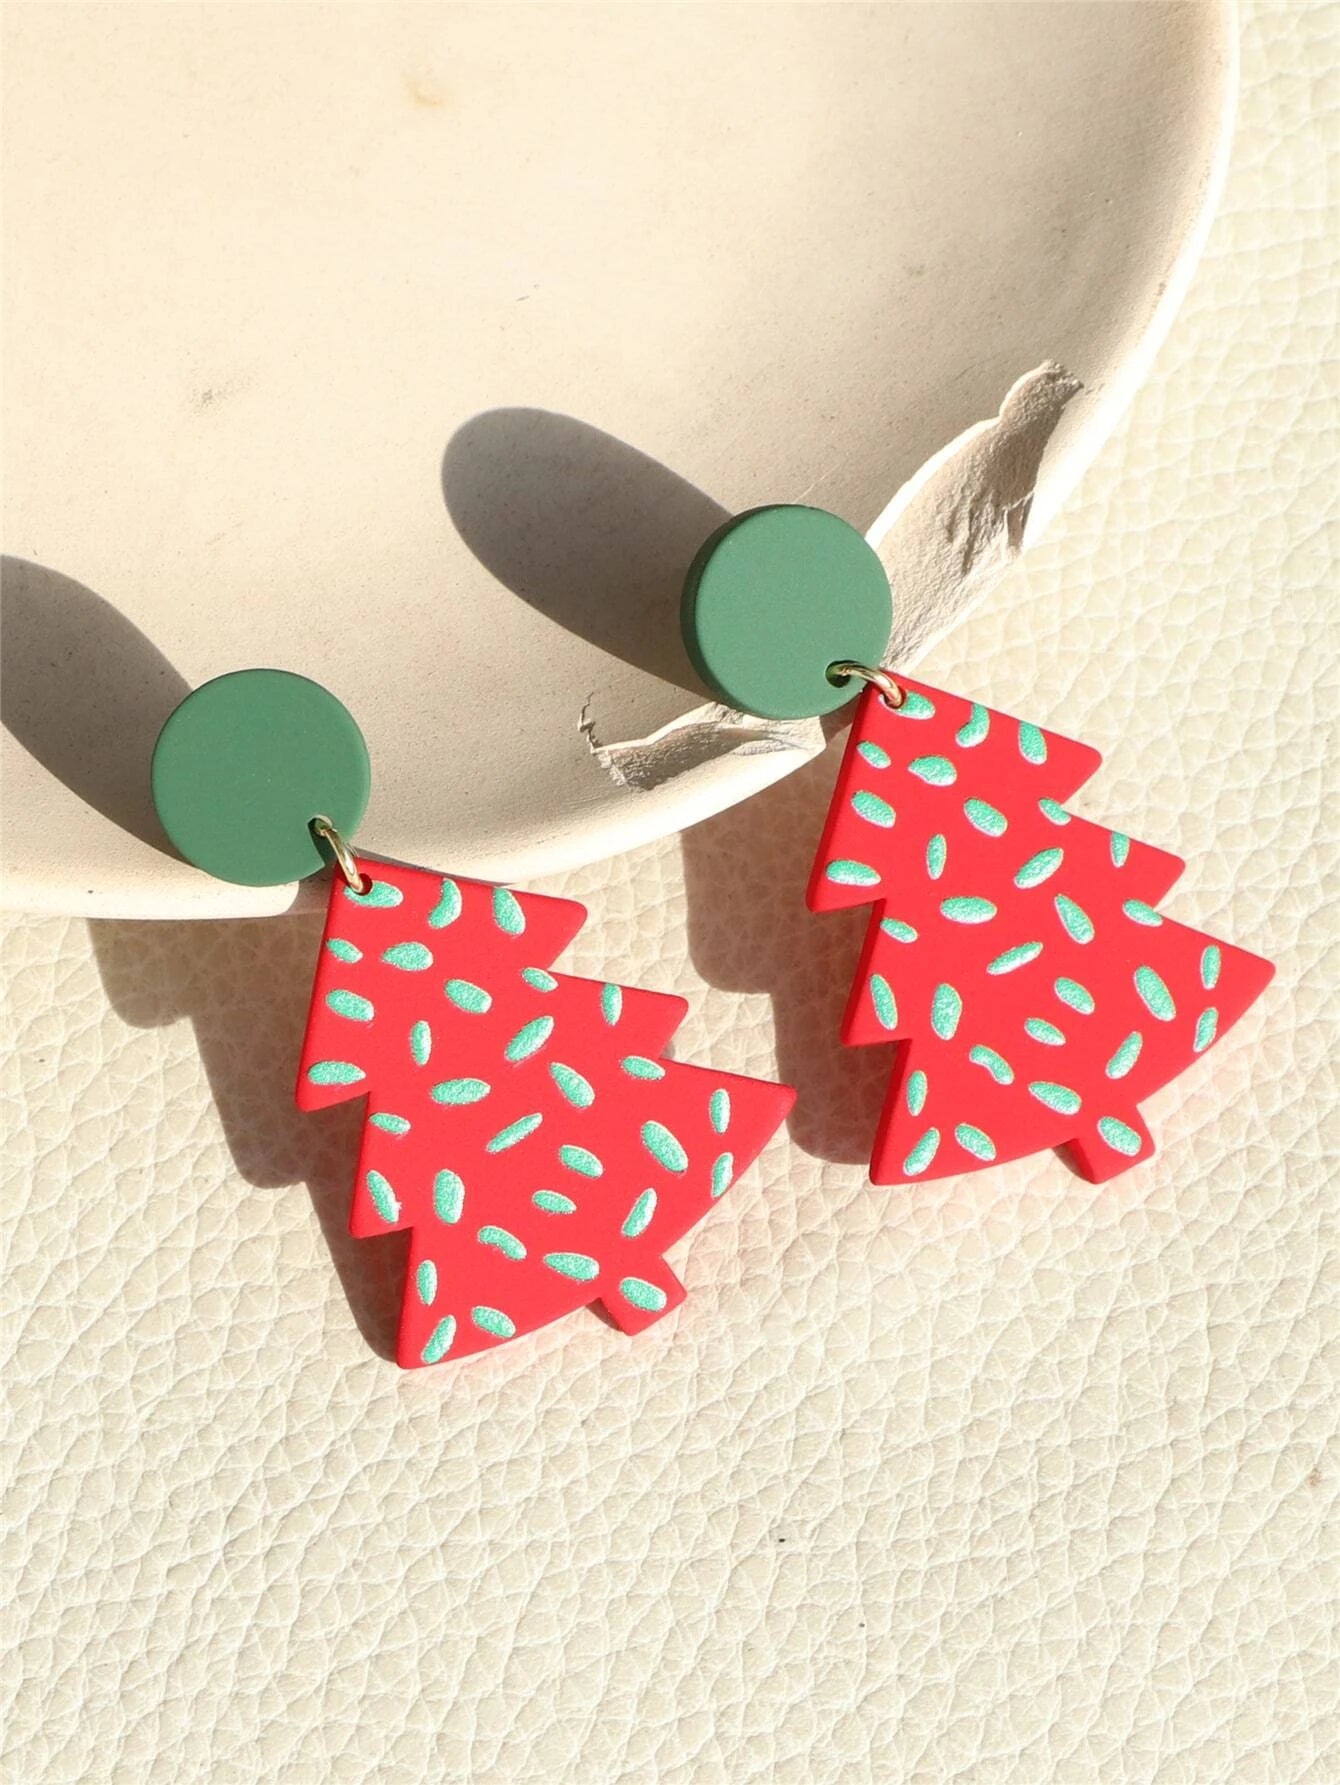 Christmas Tree earrings